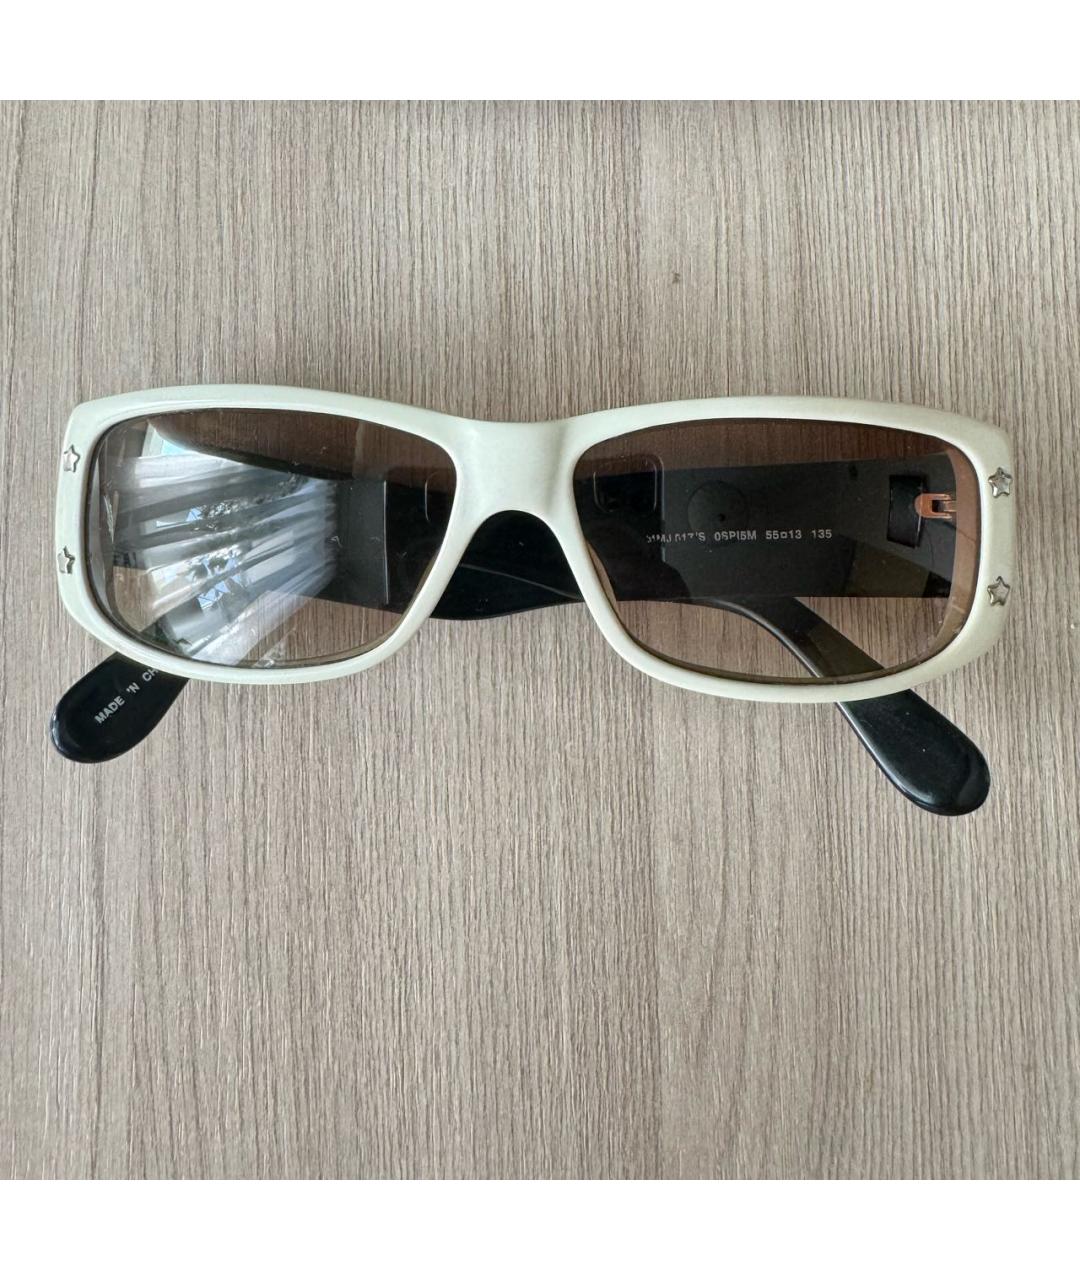 MARC BY MARC JACOBS Белые пластиковые солнцезащитные очки, фото 5